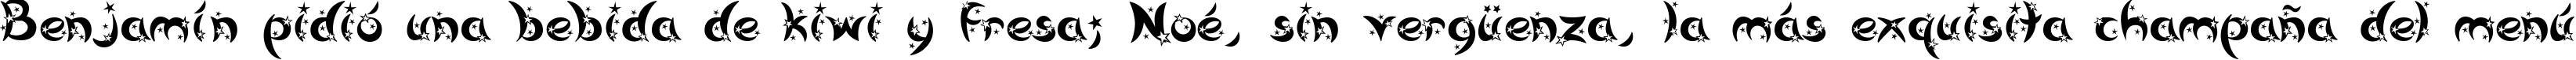 Пример написания шрифтом Moonstar текста на испанском